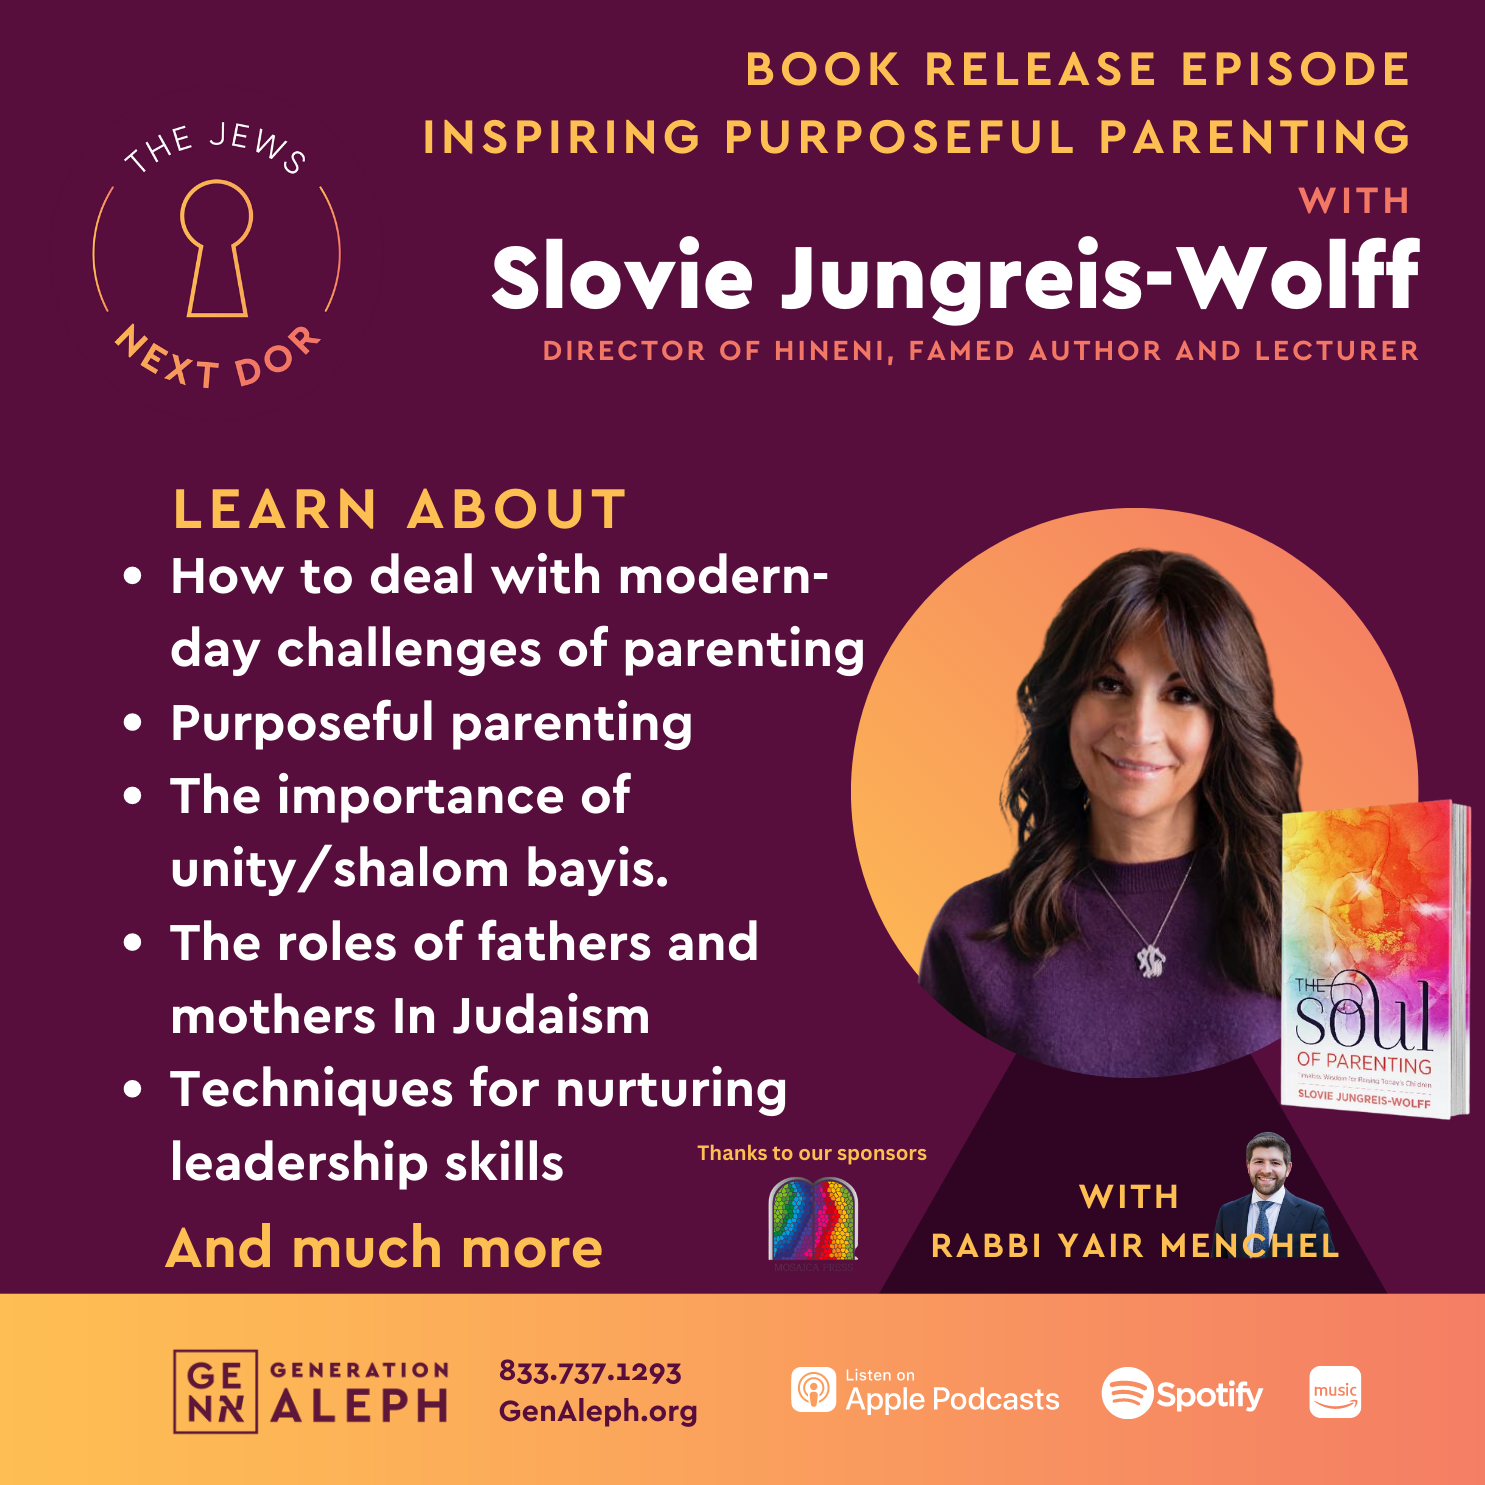 Inspiring Purposeful Parenting: Wisdom from Slovie Jungreis-Wolff – Book Release Episode